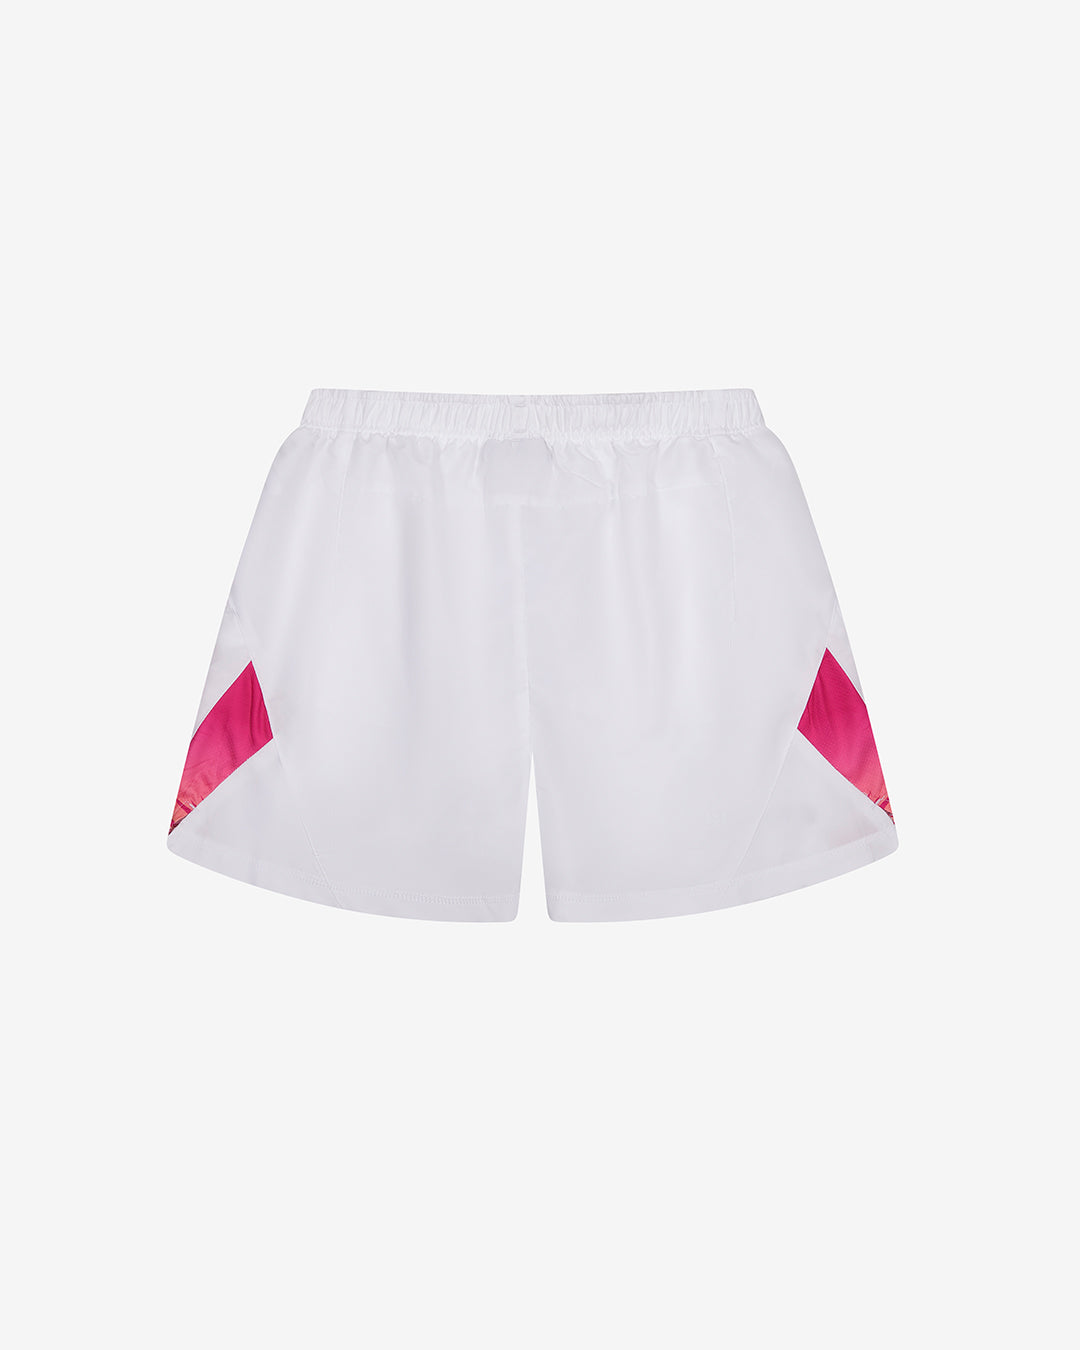 ED7:32 - Pink Palms Clipper Shorts - White